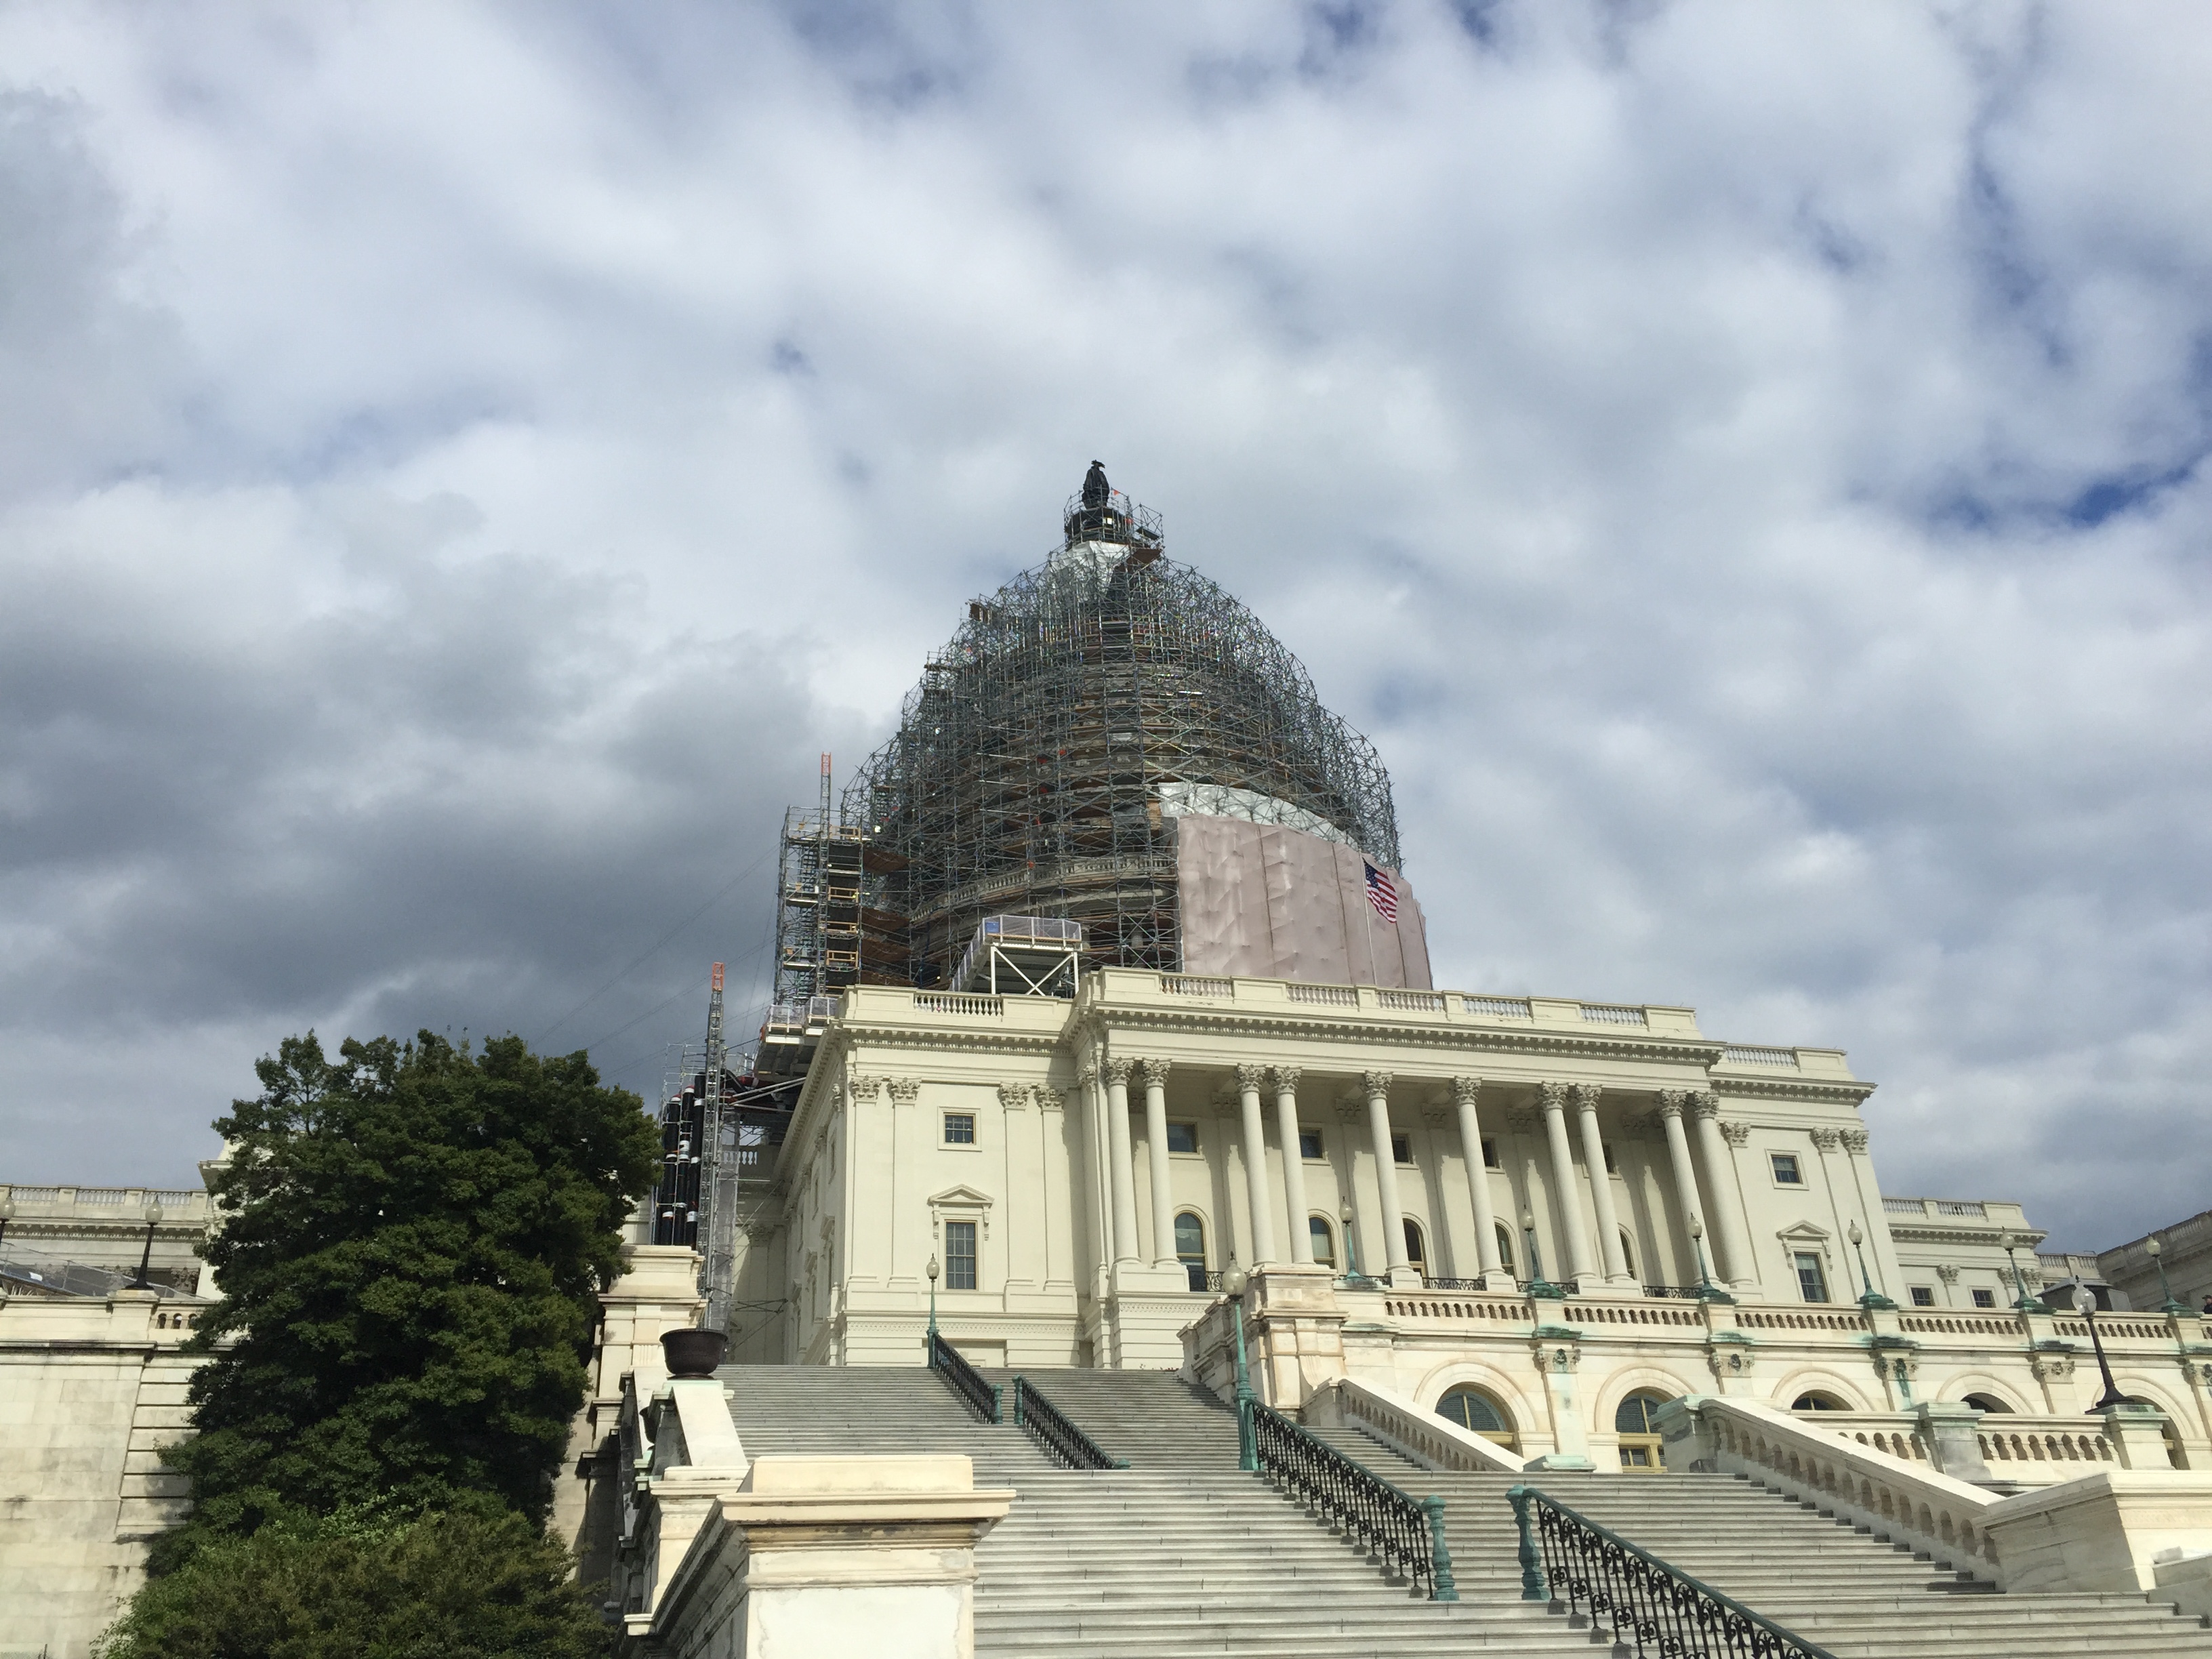 Lew and Foxx urge Congress to fund infrastructure